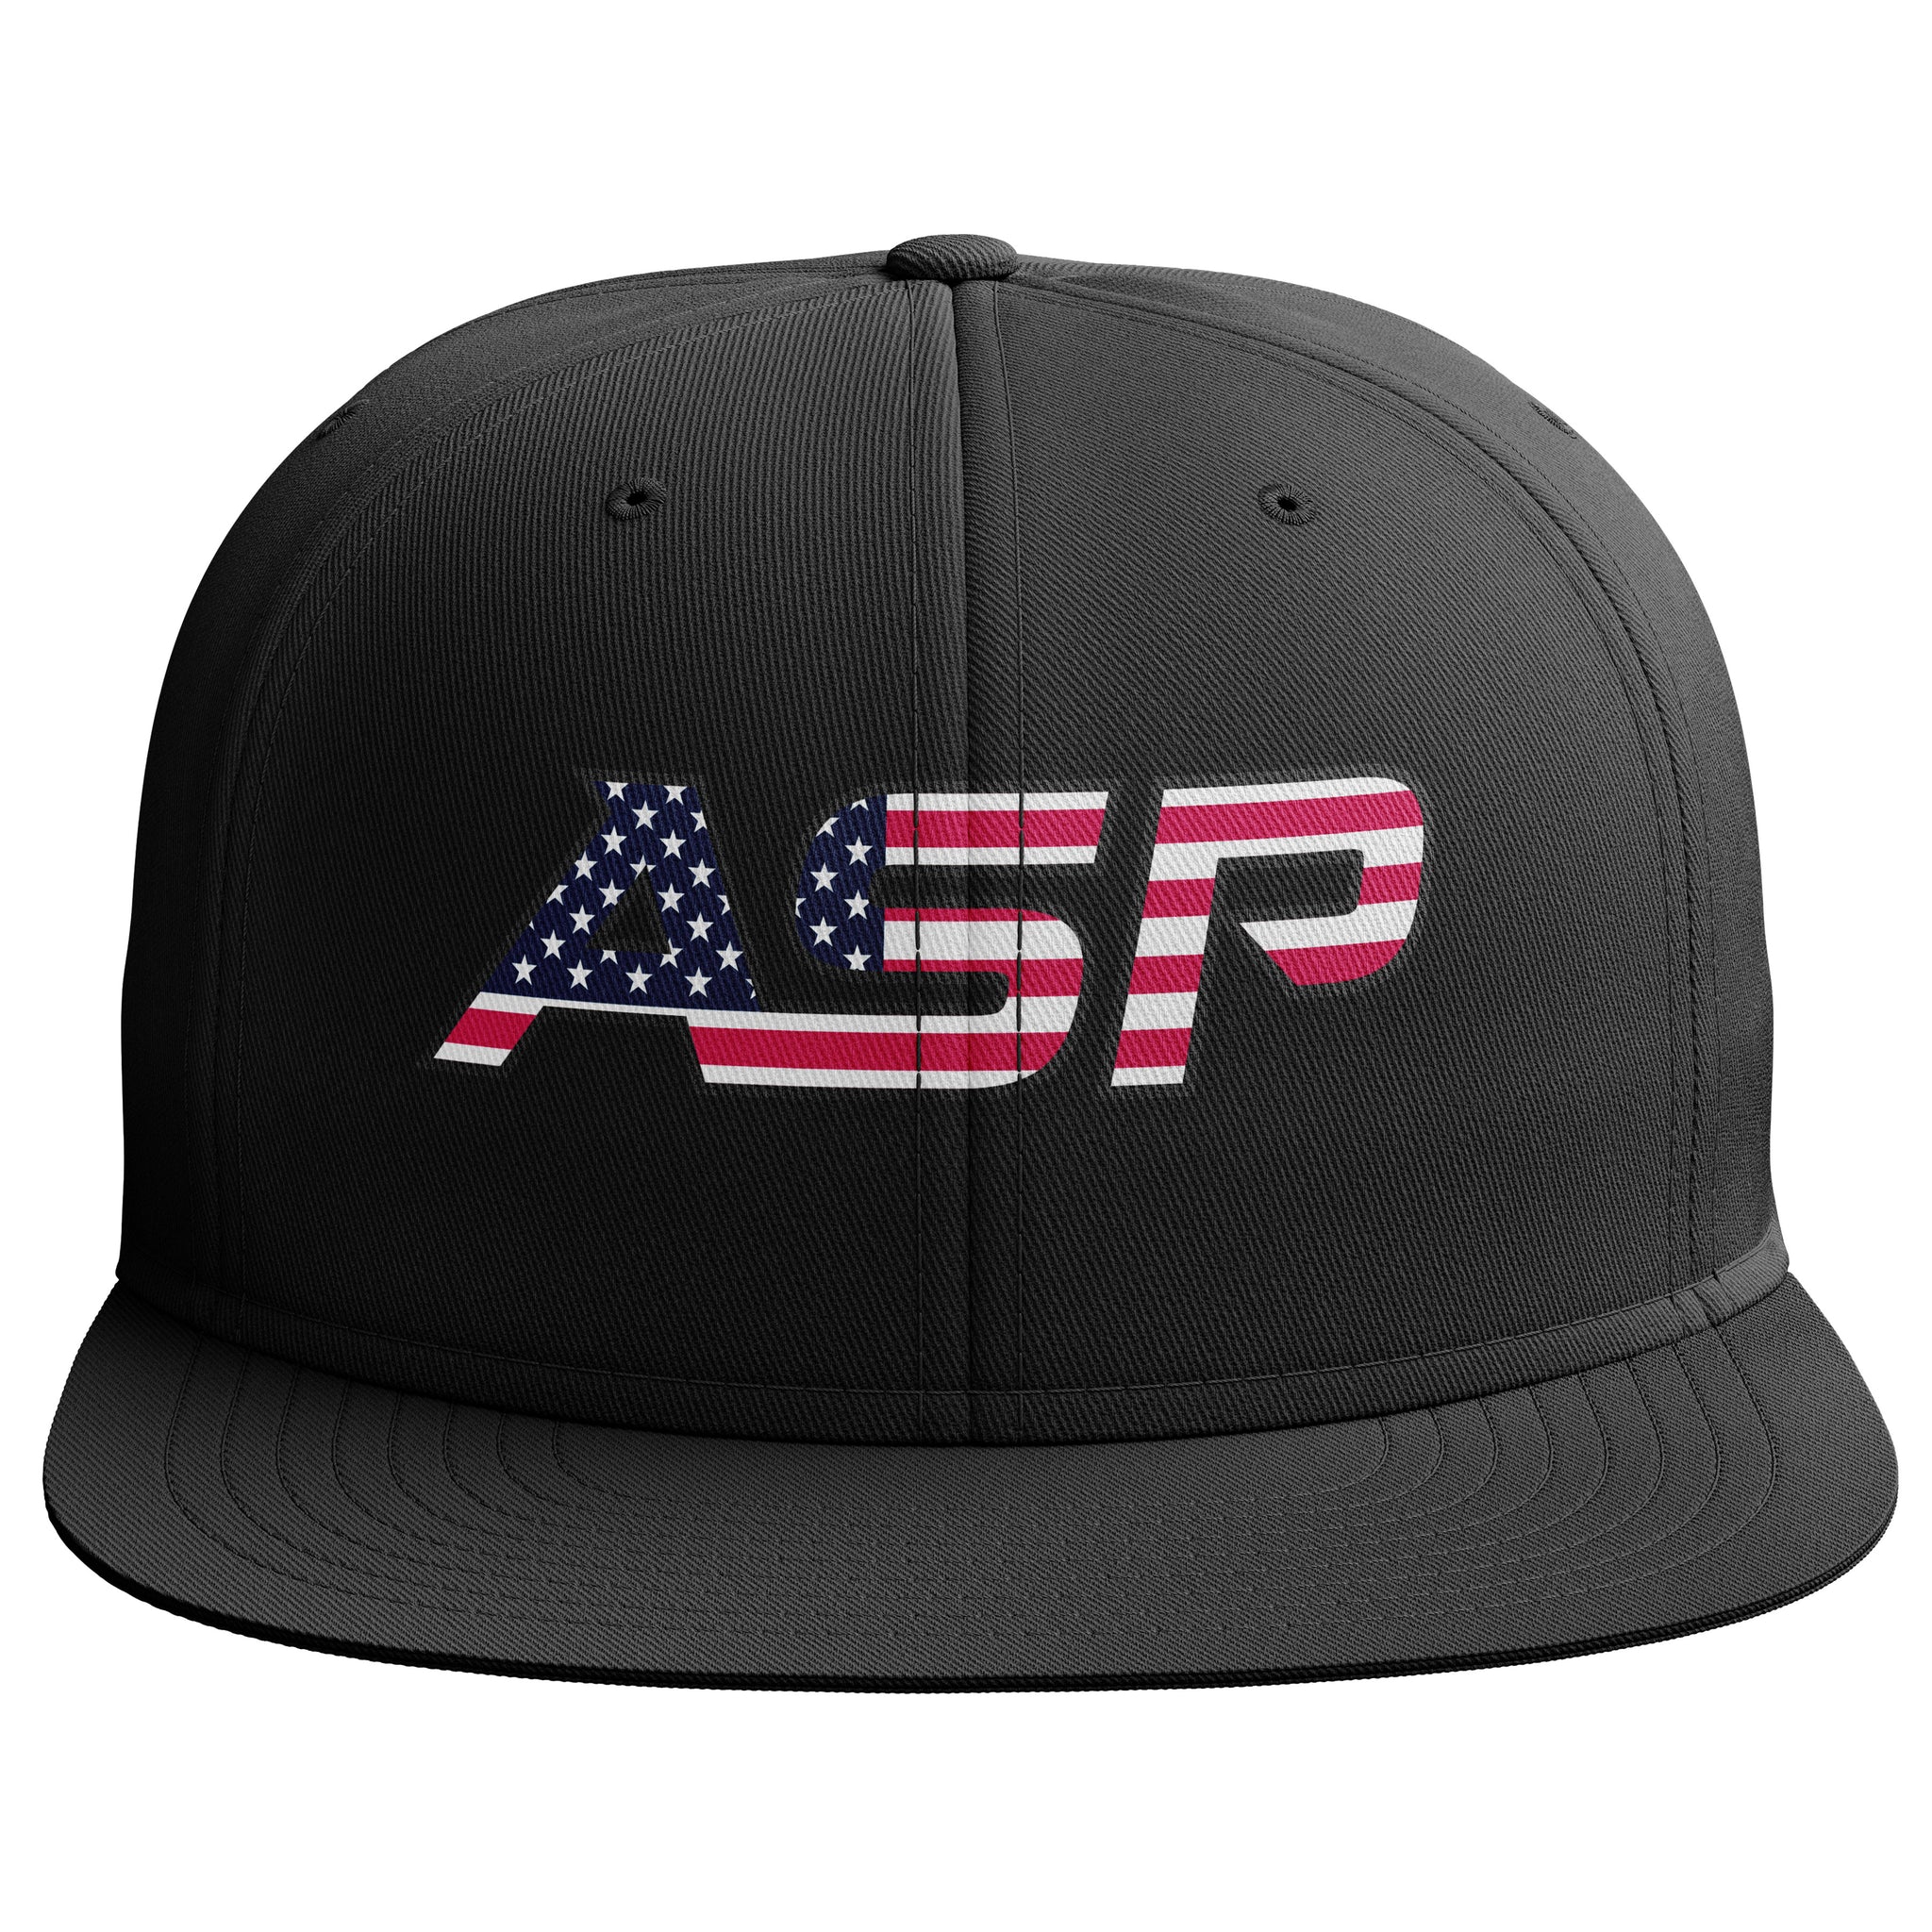 ASP USA Series PTS20 Hat